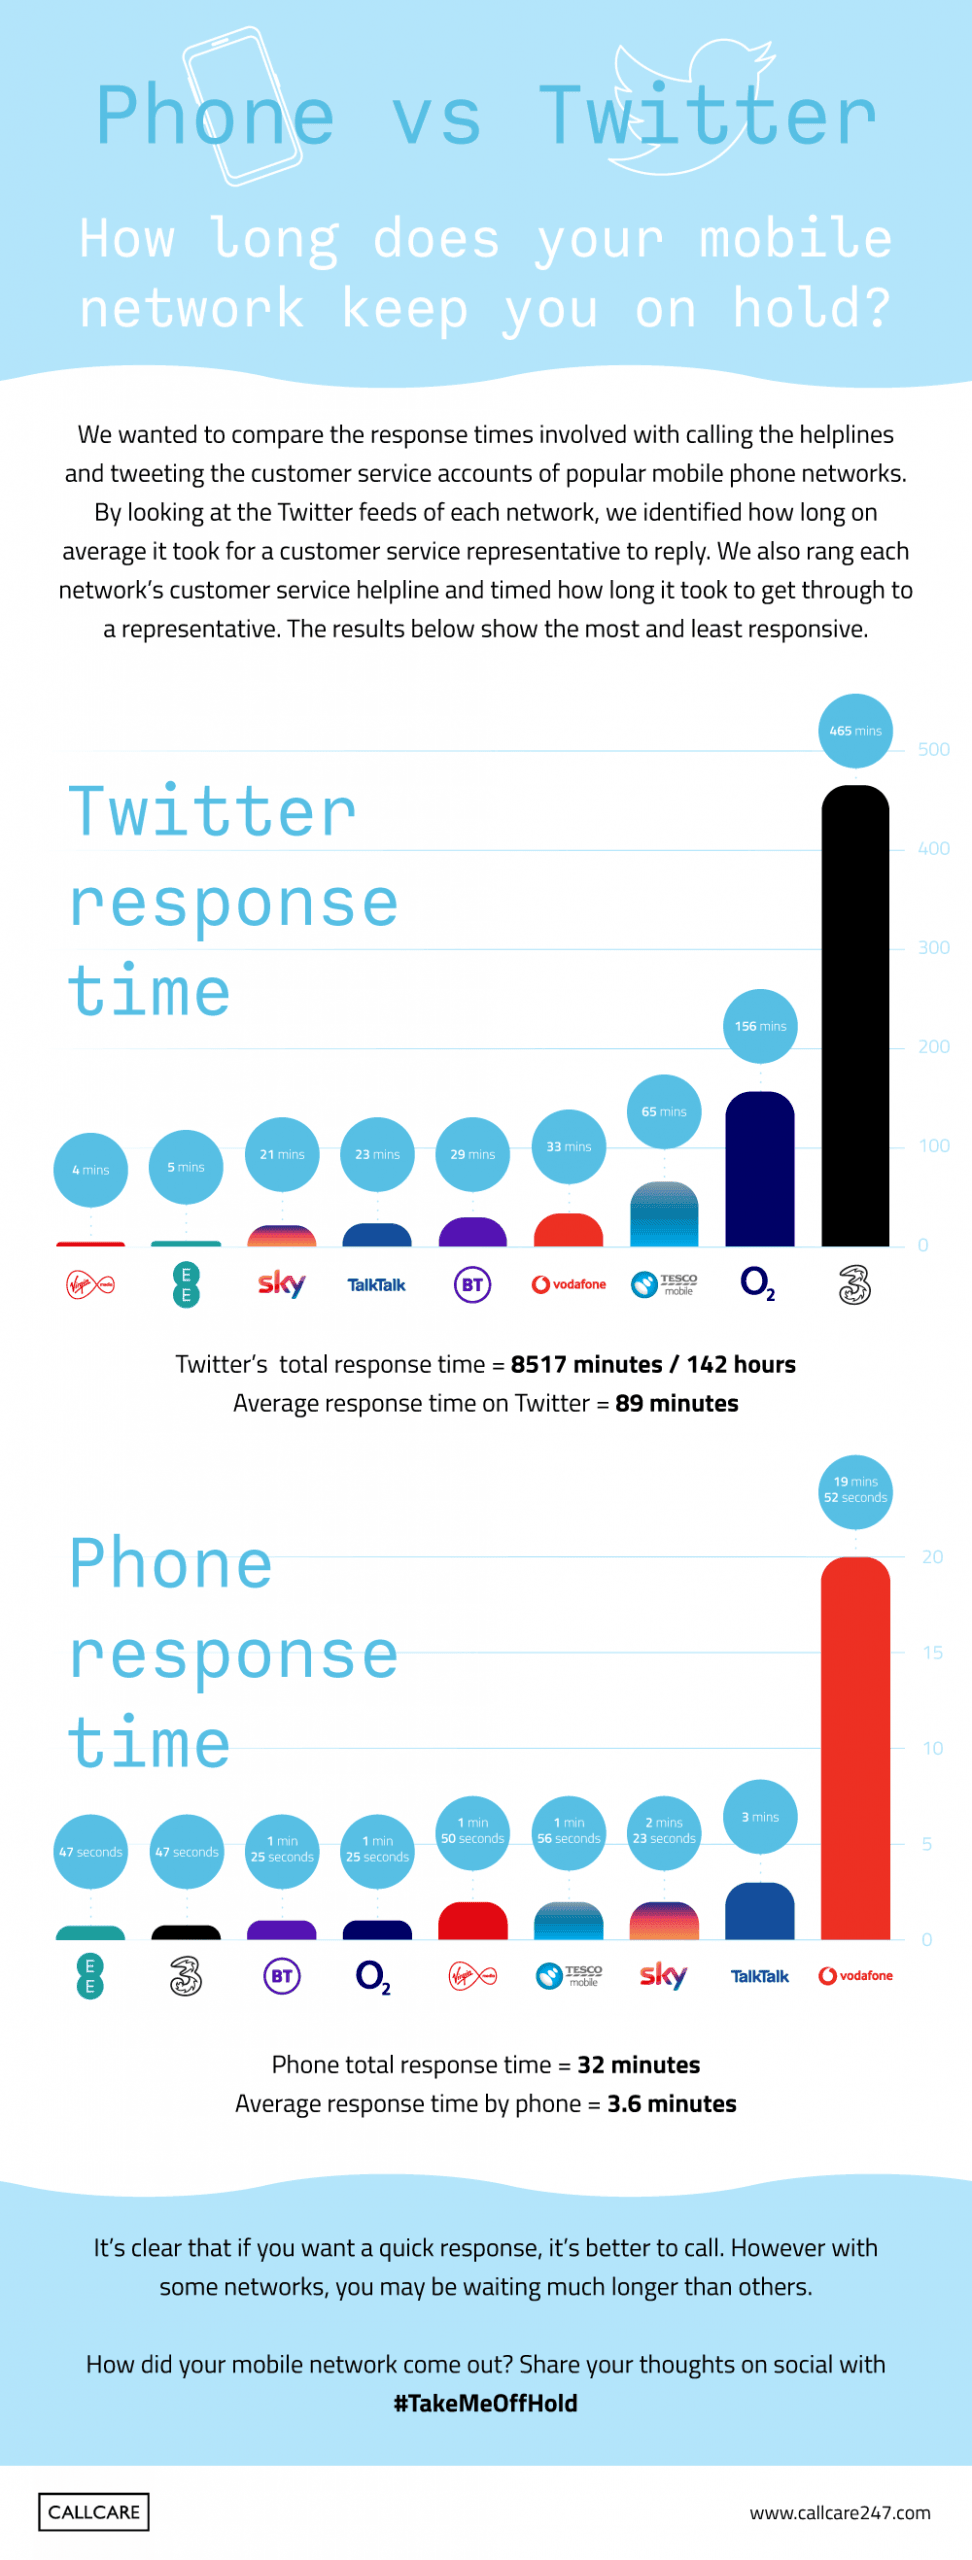 Phone vs Social - Response Times